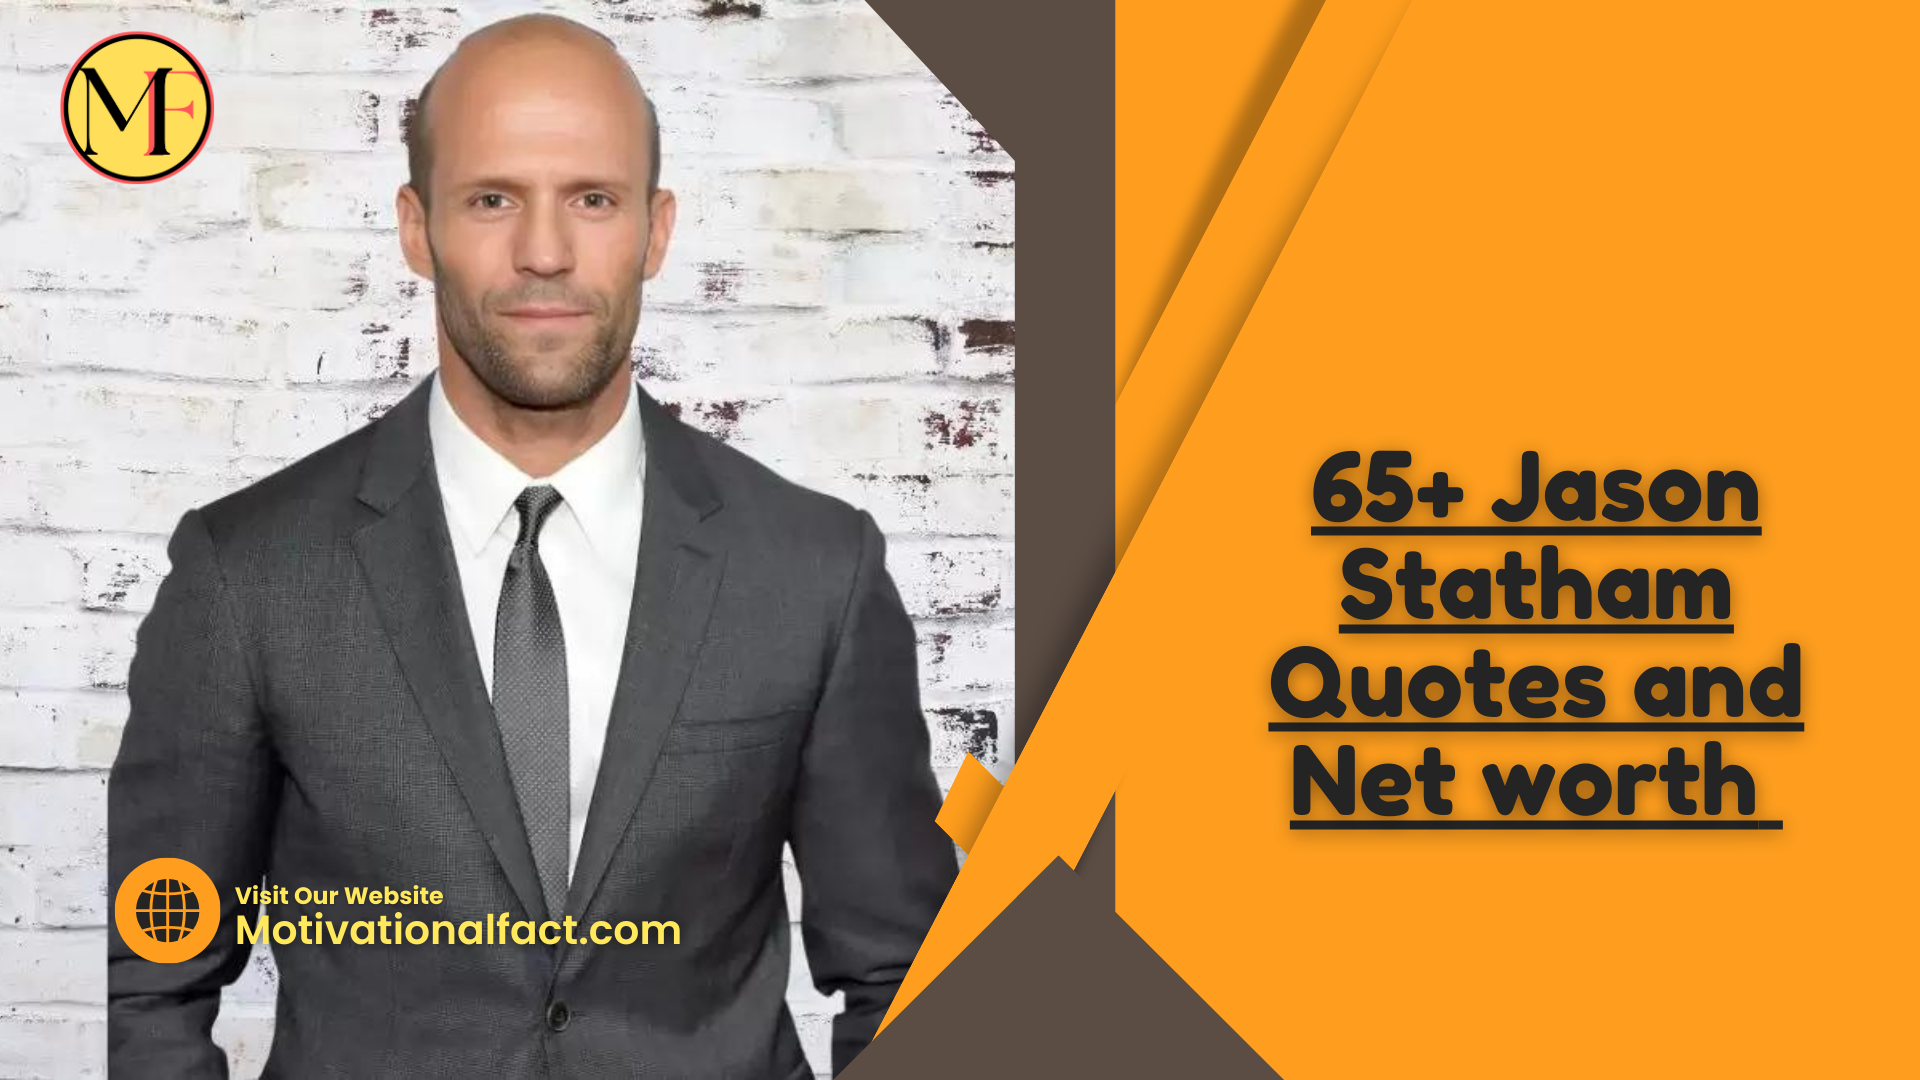 65+ Jason Statham Quotes and Net worth